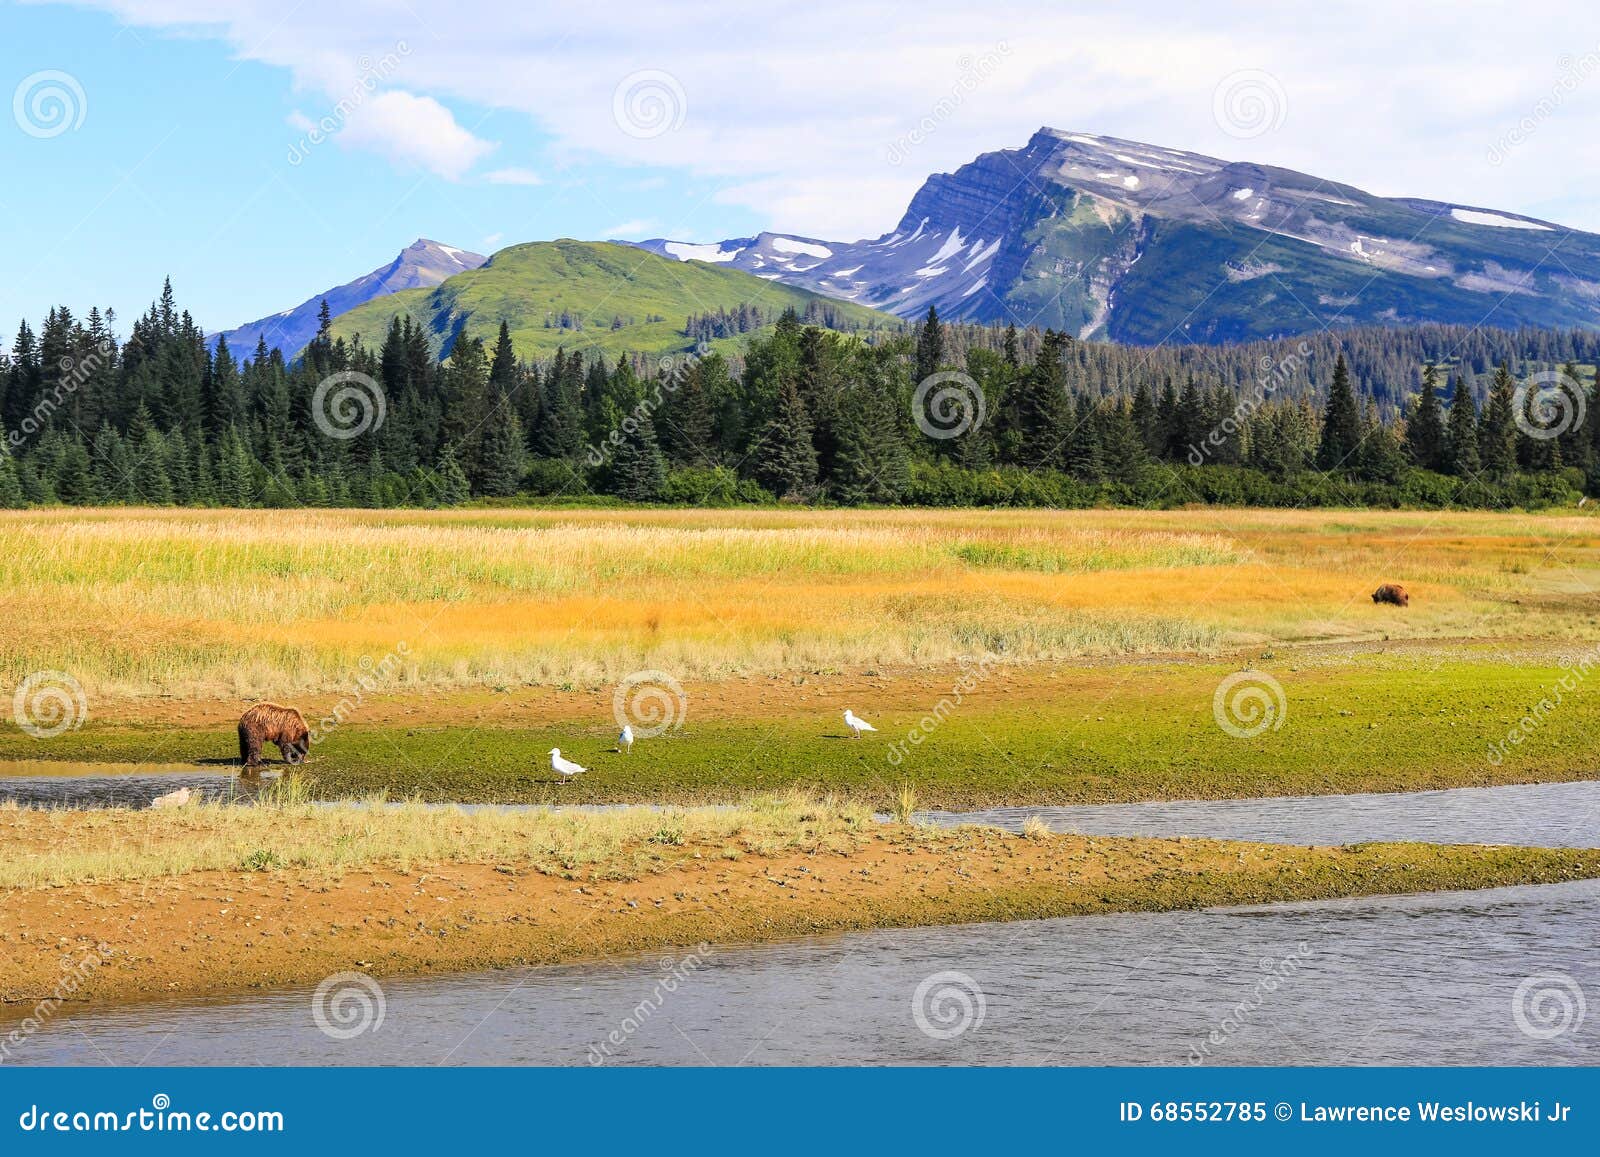 slope mountain lake clark alaska brown bears